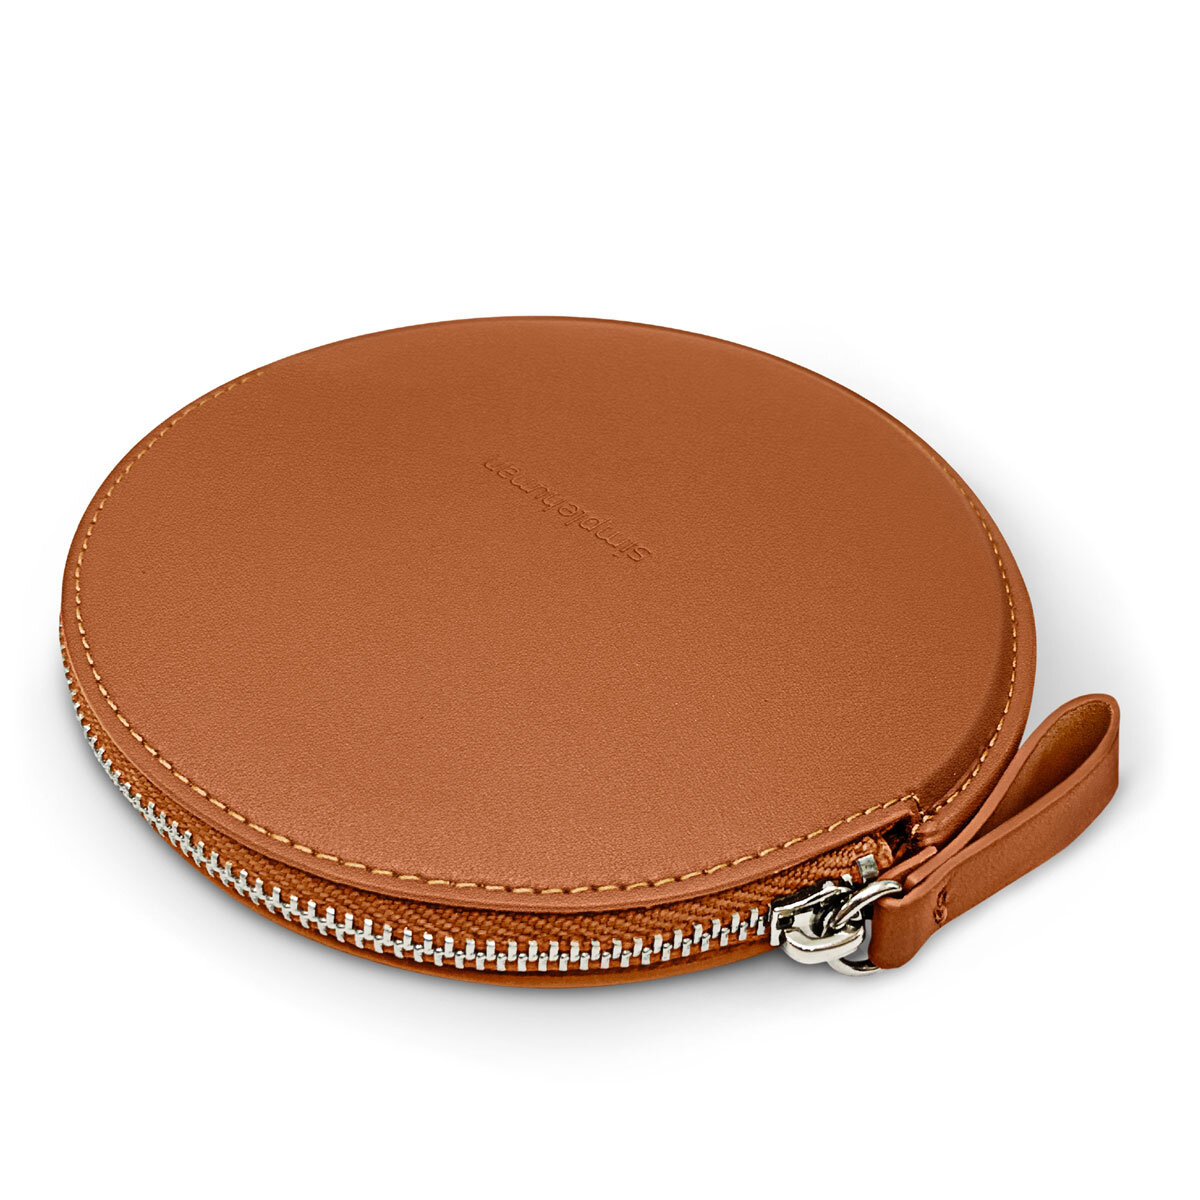 Simpelhuman compact mirror leather zip case